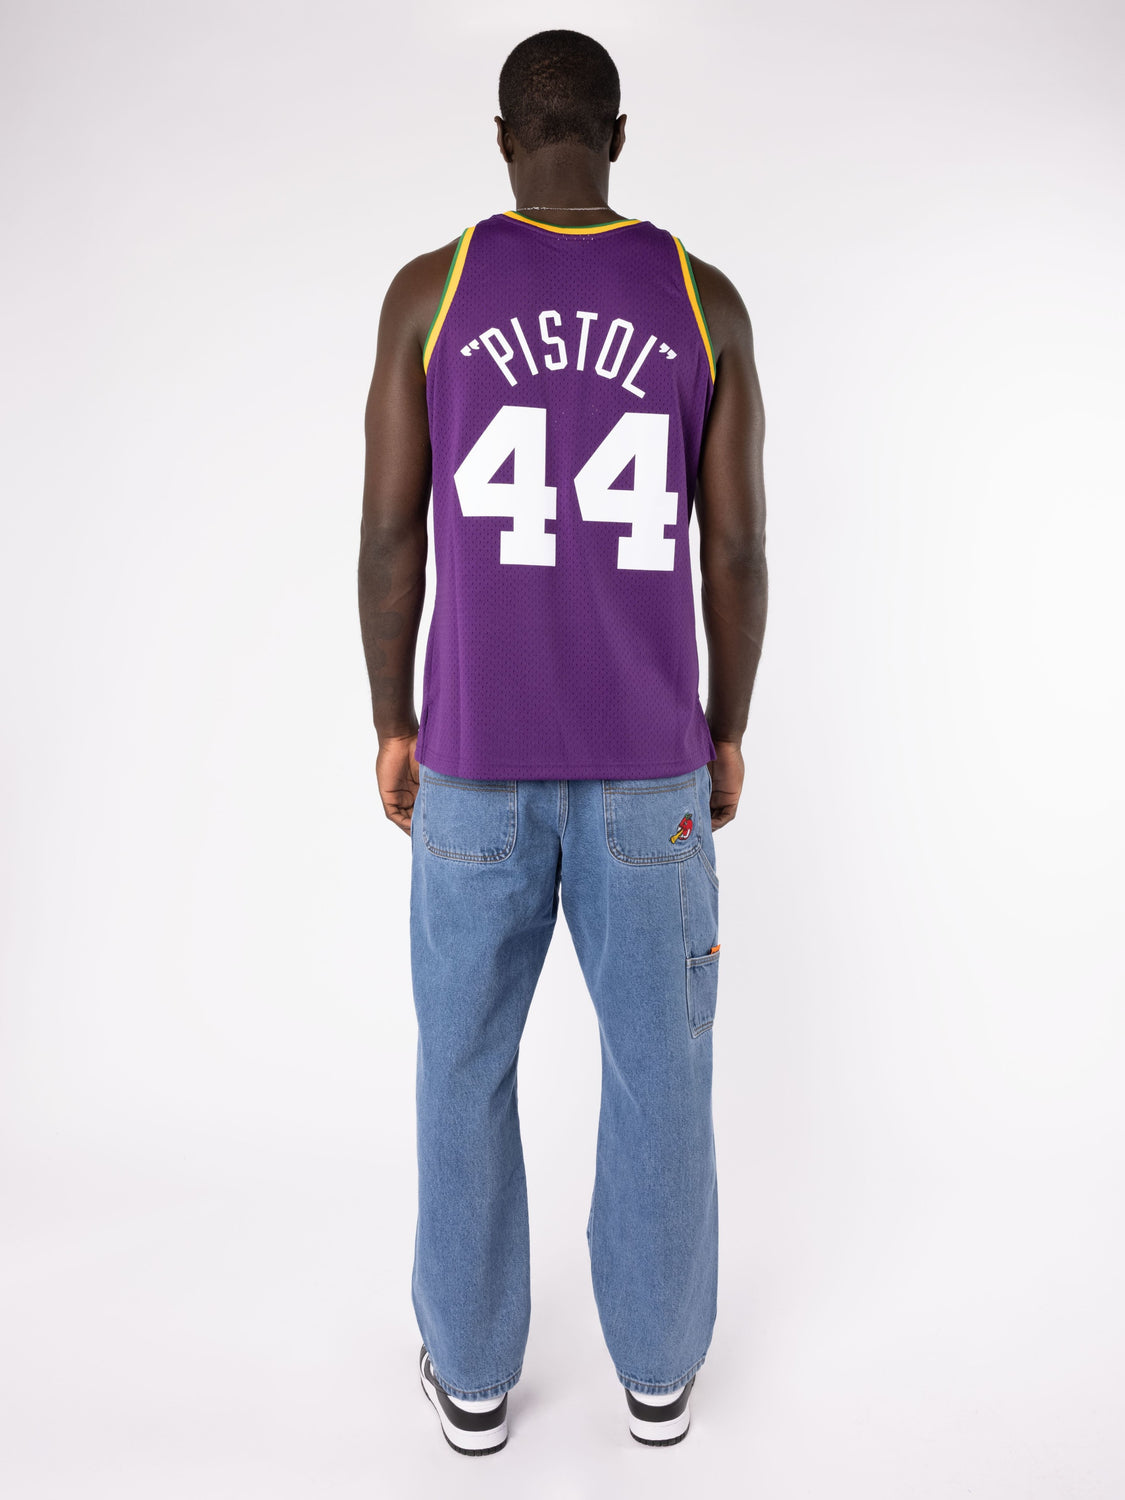 Adidas Utah Jazz Authentic Purple Pete Maravich Pistol Jersey - Men's